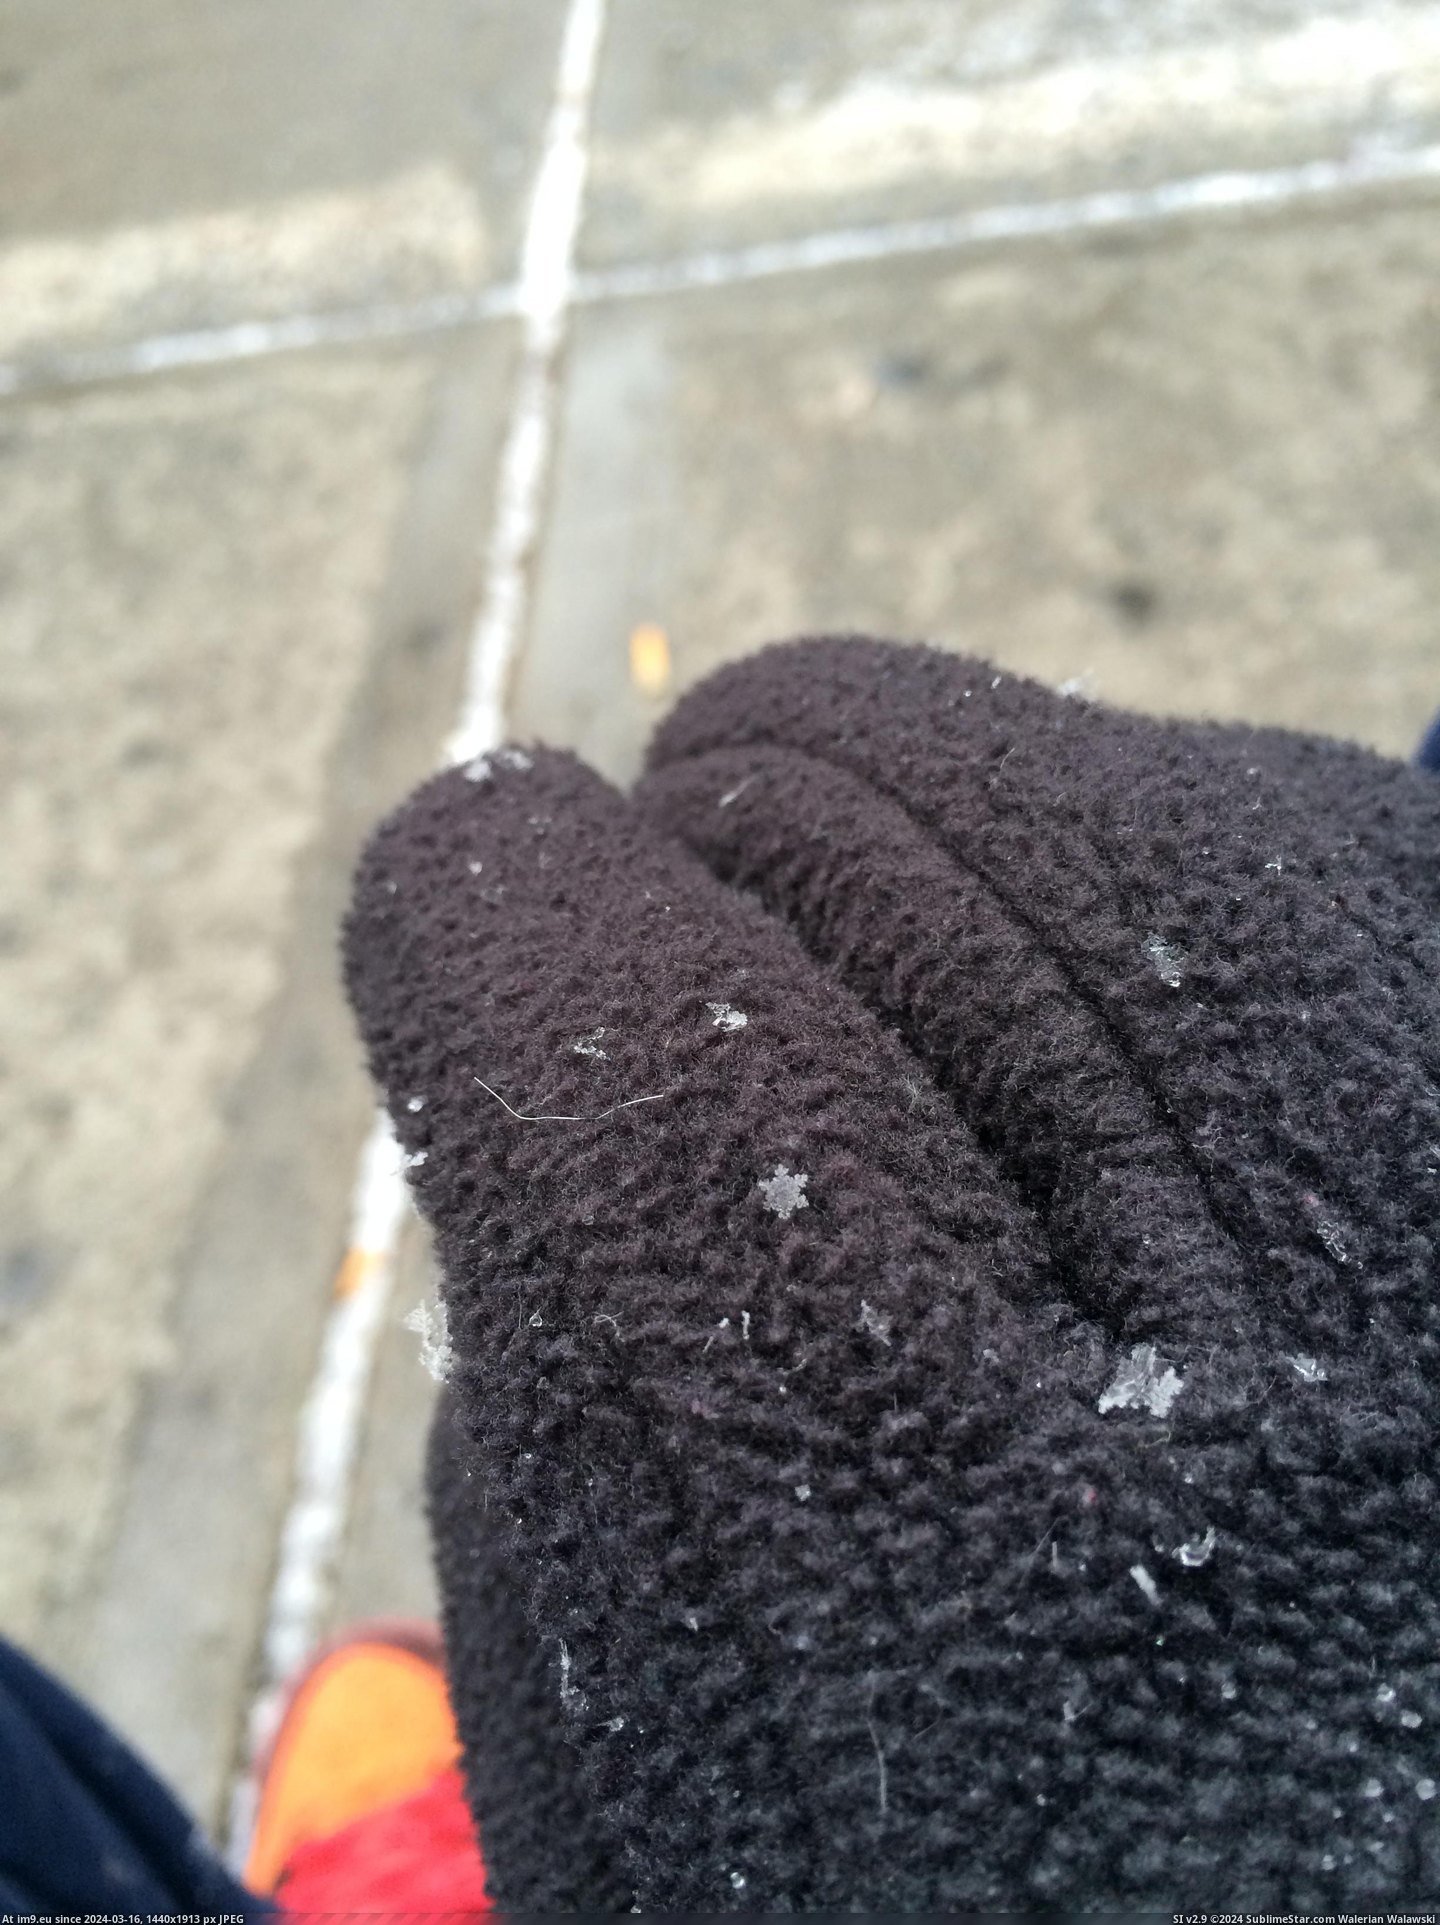 #Perfect #Landed #Glove #Snowflake [Pics] A near-perfect snowflake just landed on my glove Pic. (Изображение из альбом My r/PICS favs))